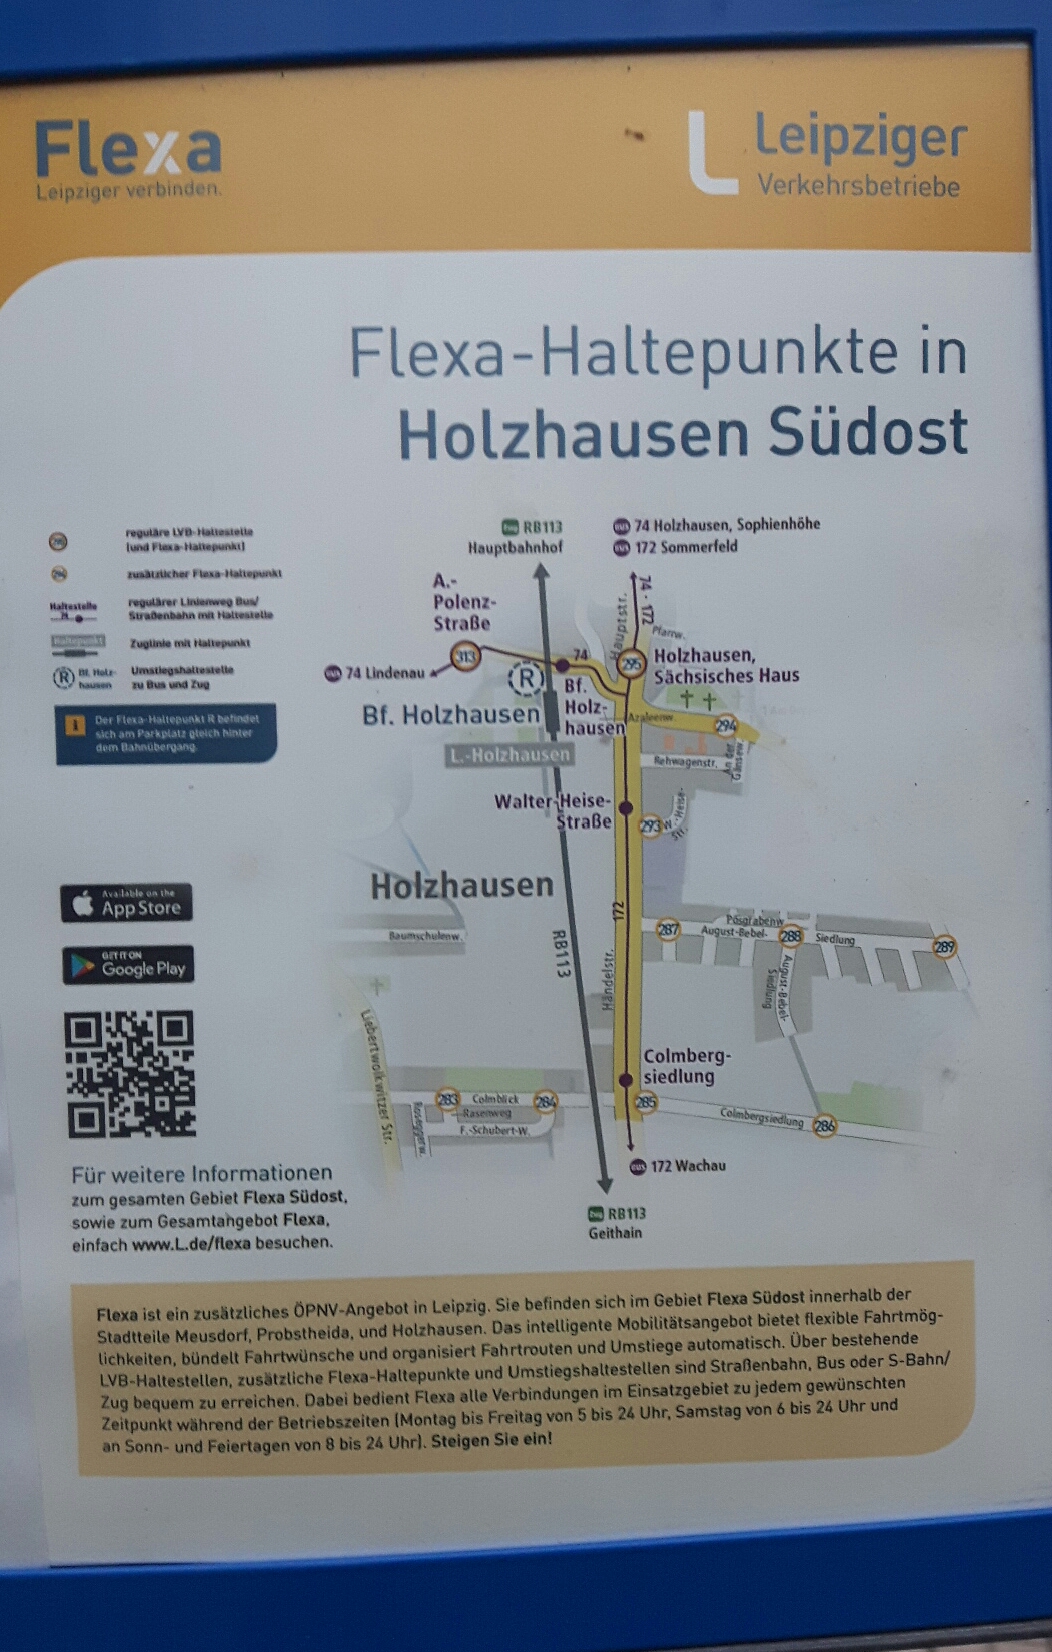 Holzhausen, Leipzig, April: Neues von Flexa Südost